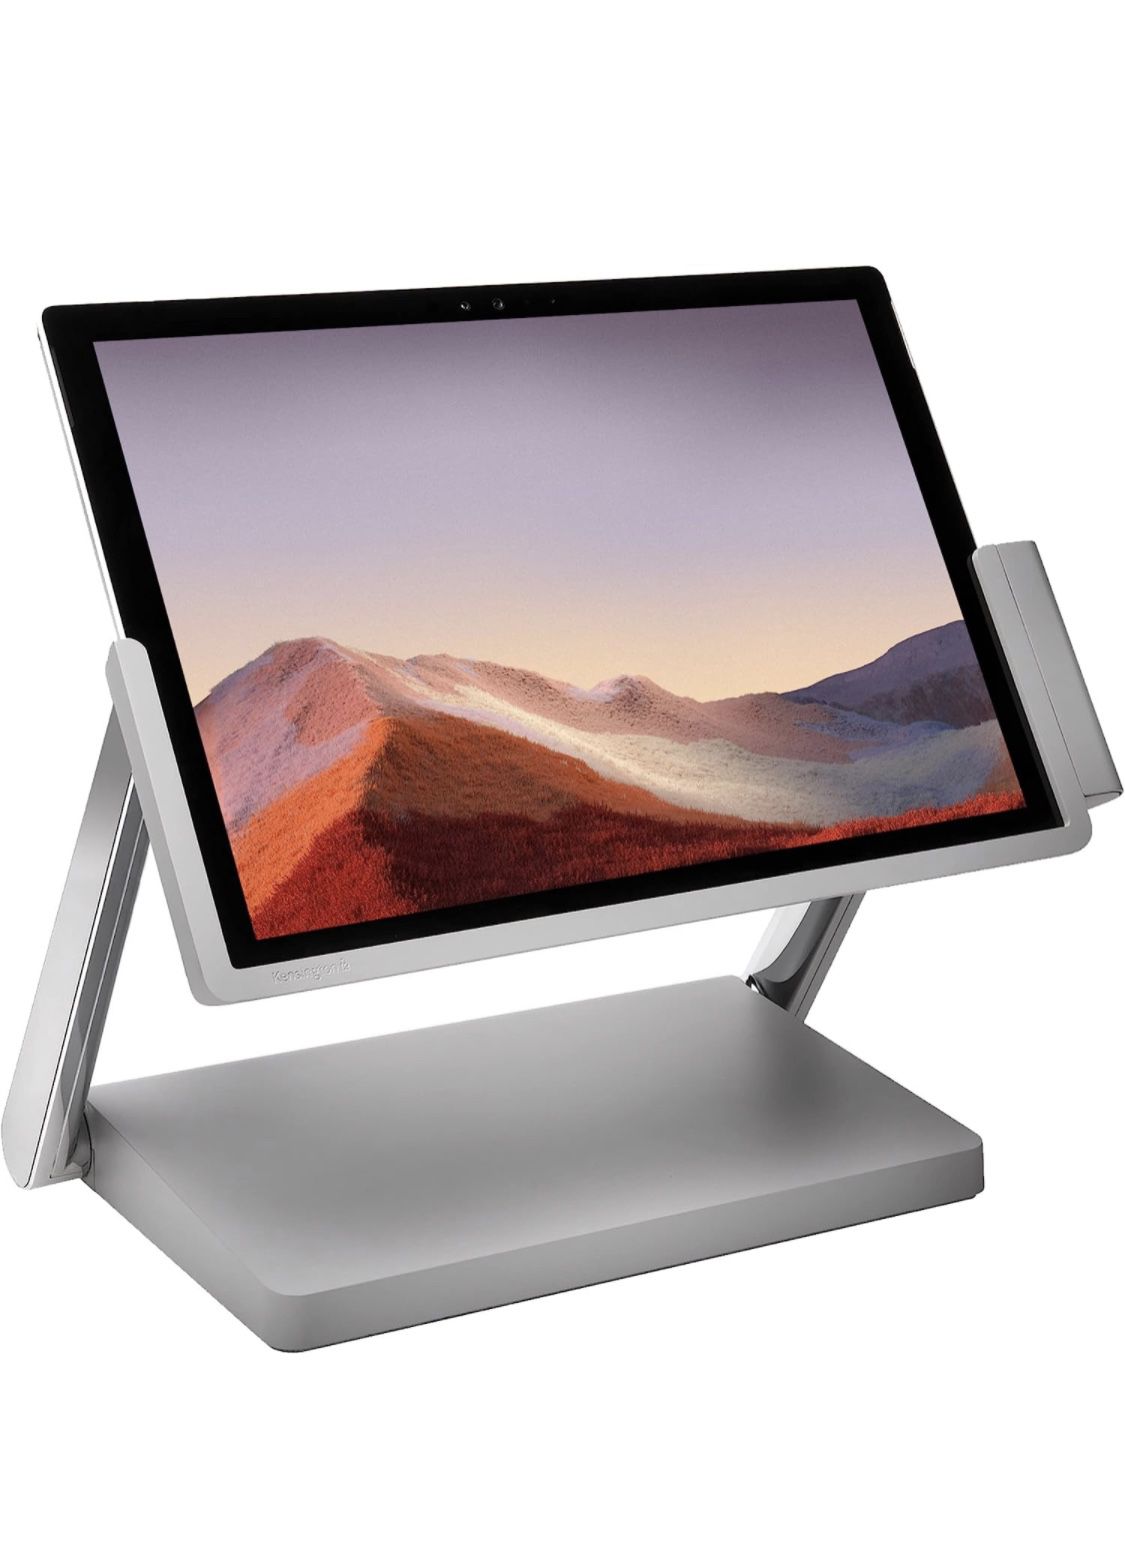 Kensington SD7000 Surface Pro Docking Station for Surface Pro 7, 7+, 6, Dual 4K Video Output (K62917NA)